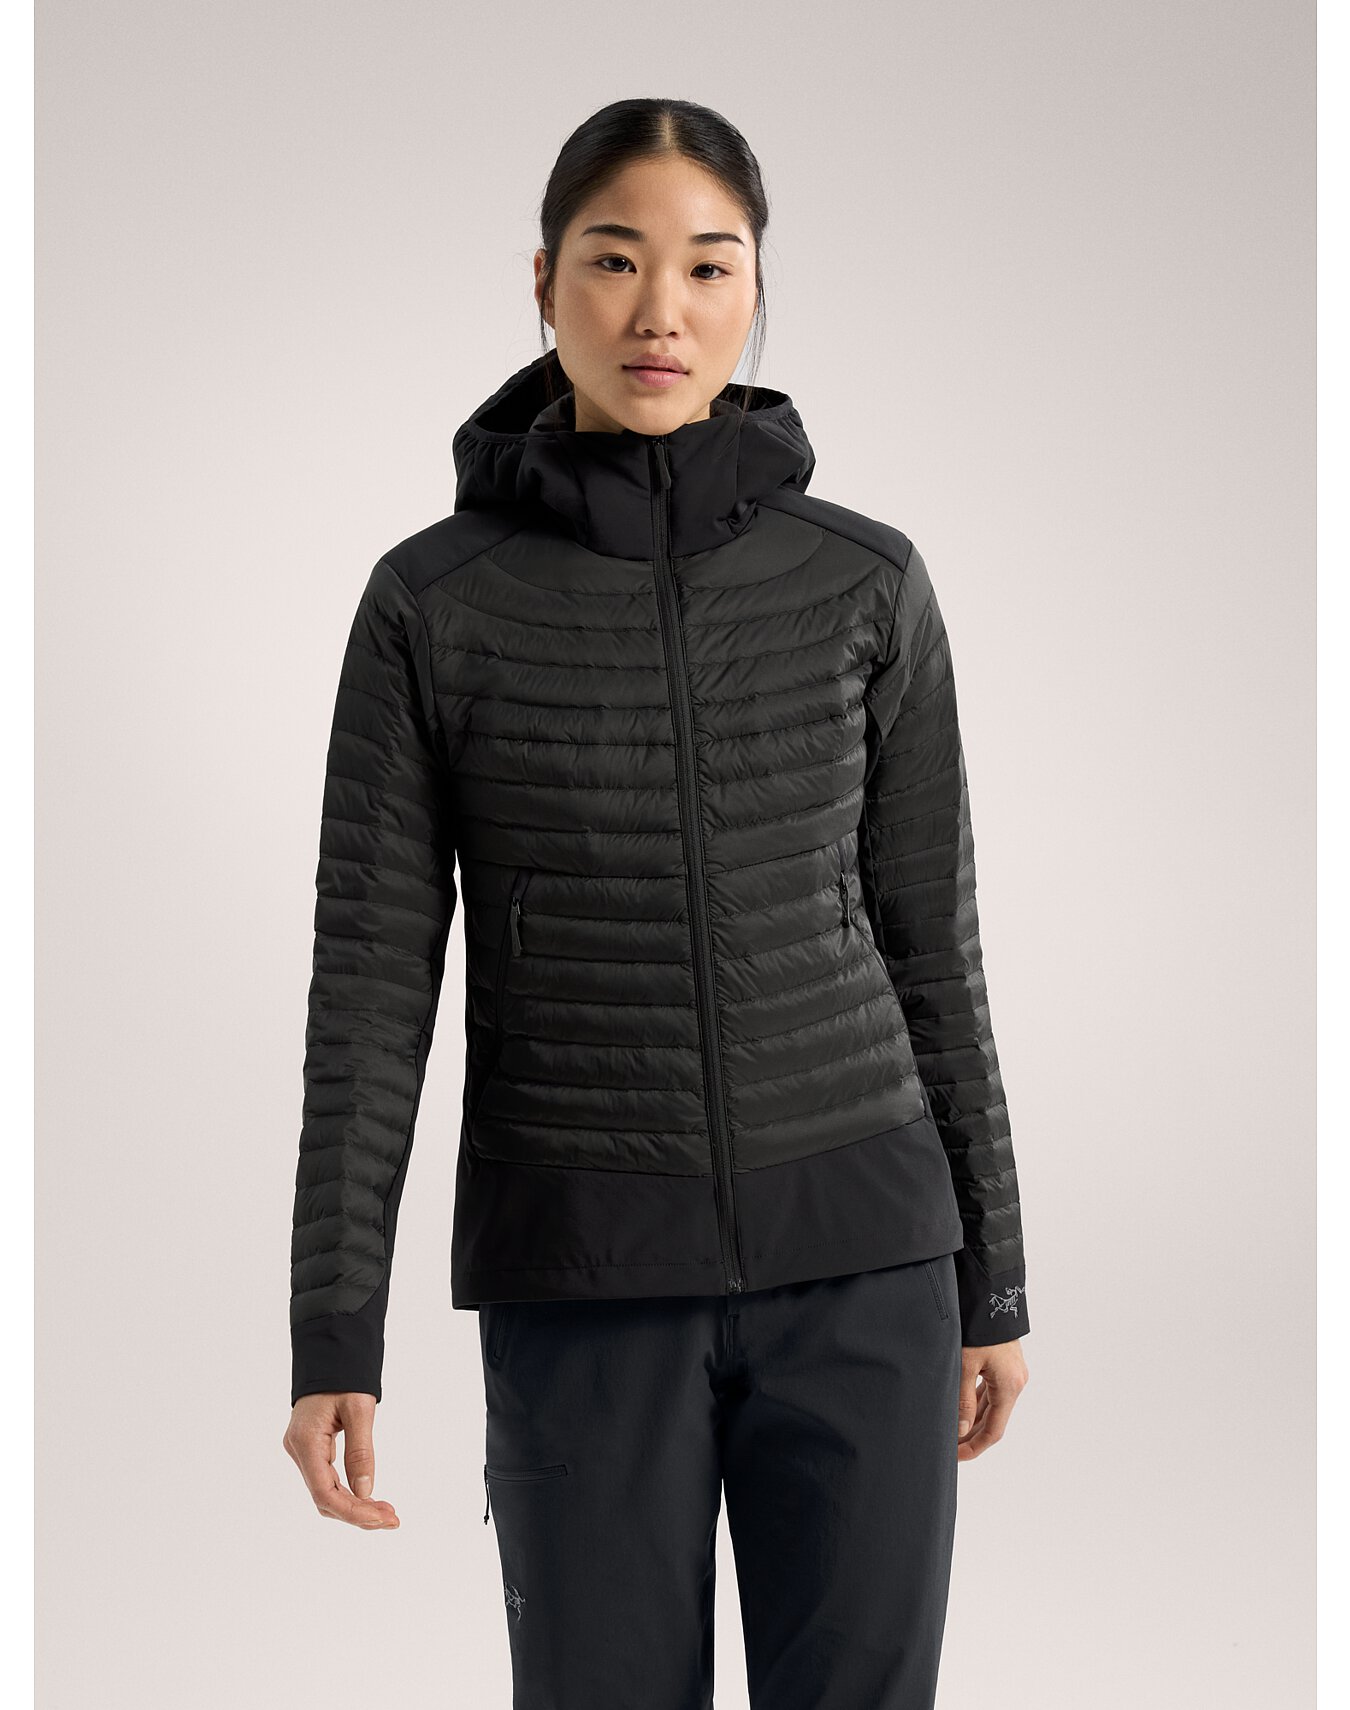 Buy Women Black Pike Lake II Long Jacket Online at Columbia Sportswear |  518155